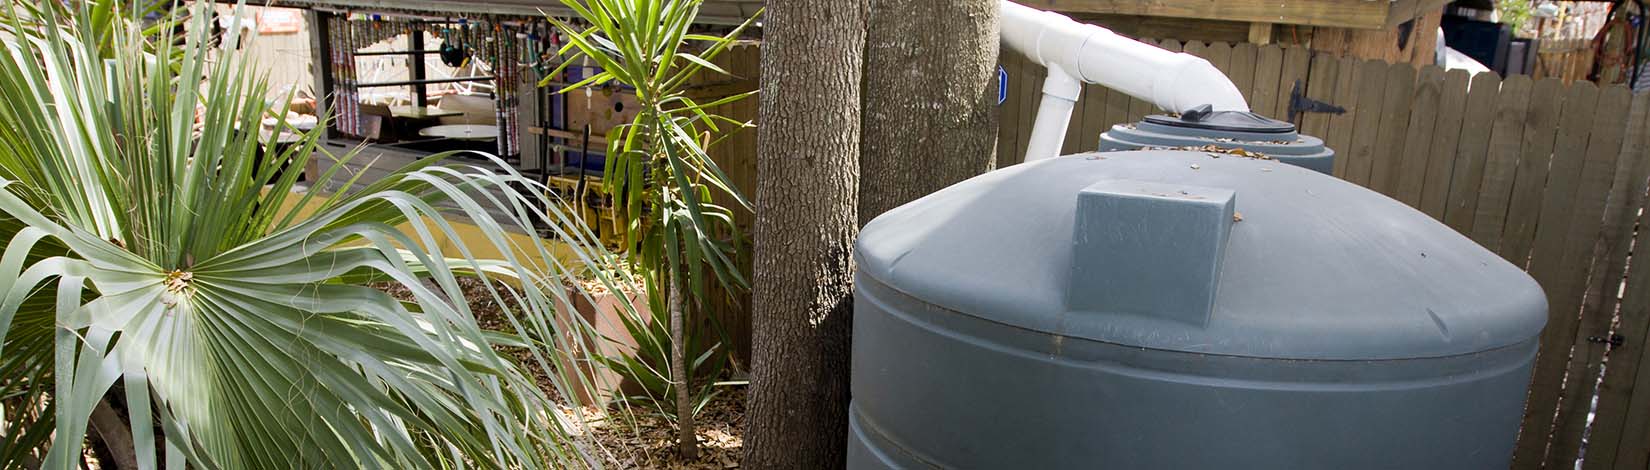 Restaurant saving and using rainwater in cistern